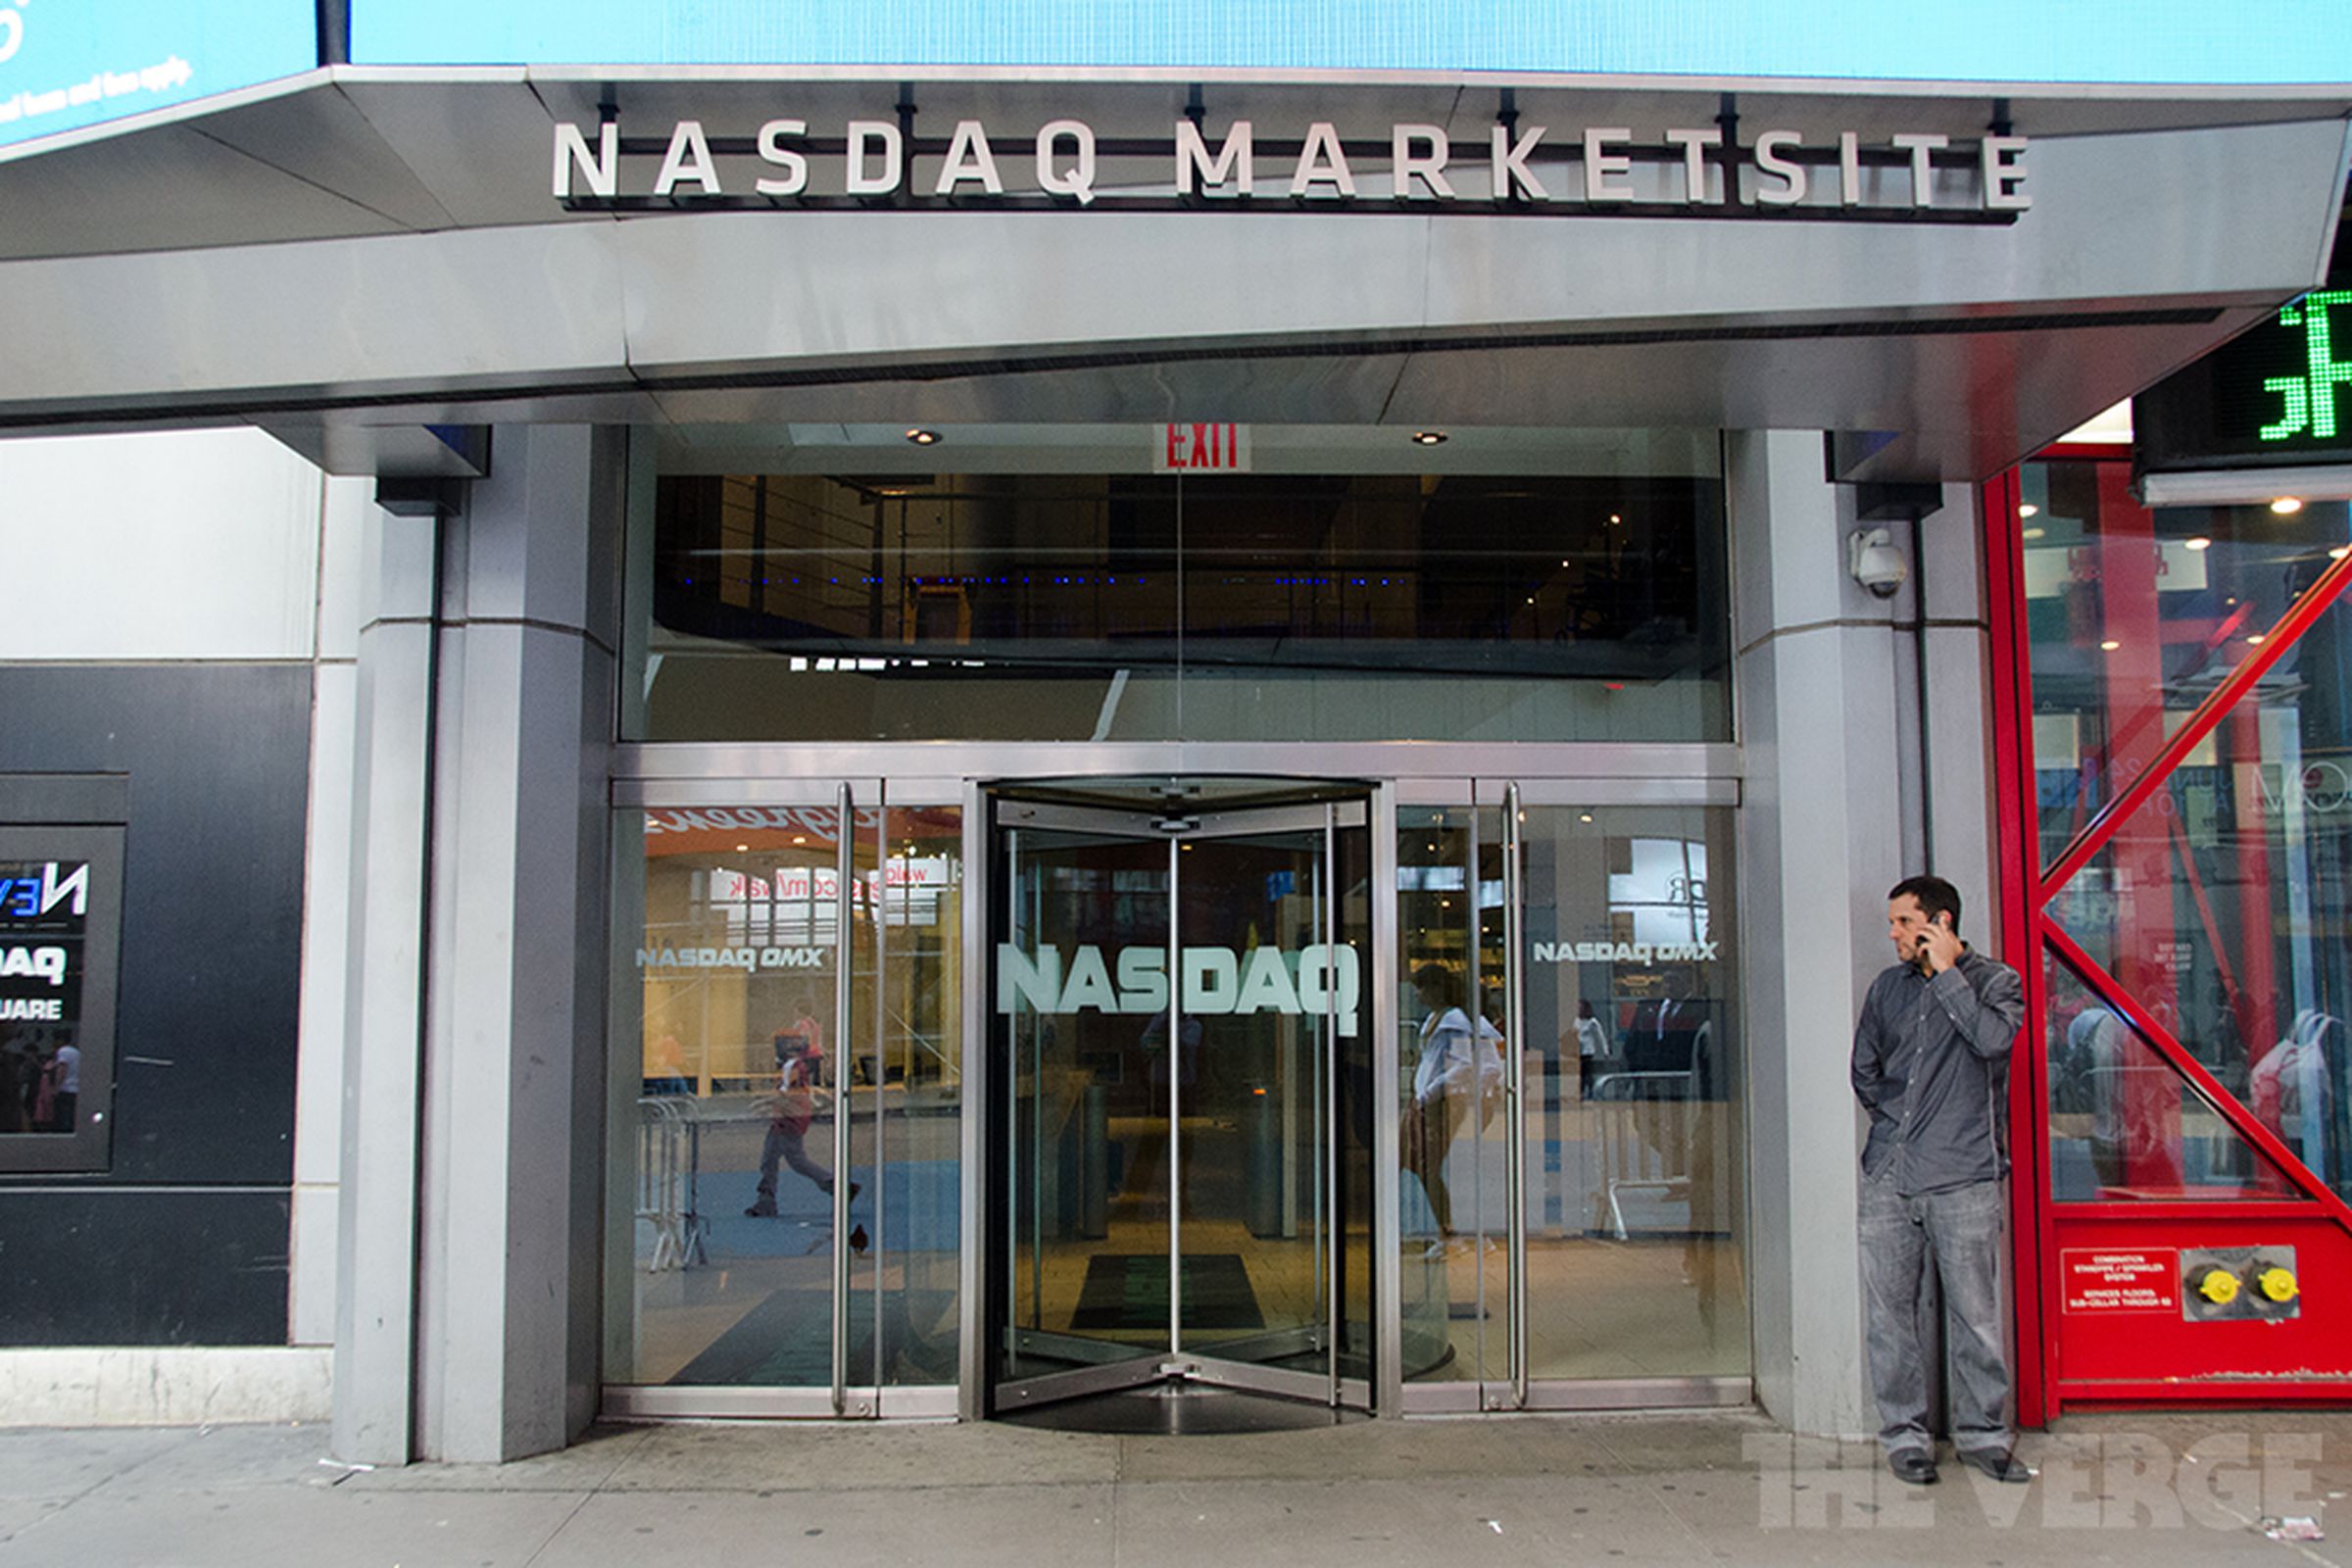 NASDAQ times square (STOCK)